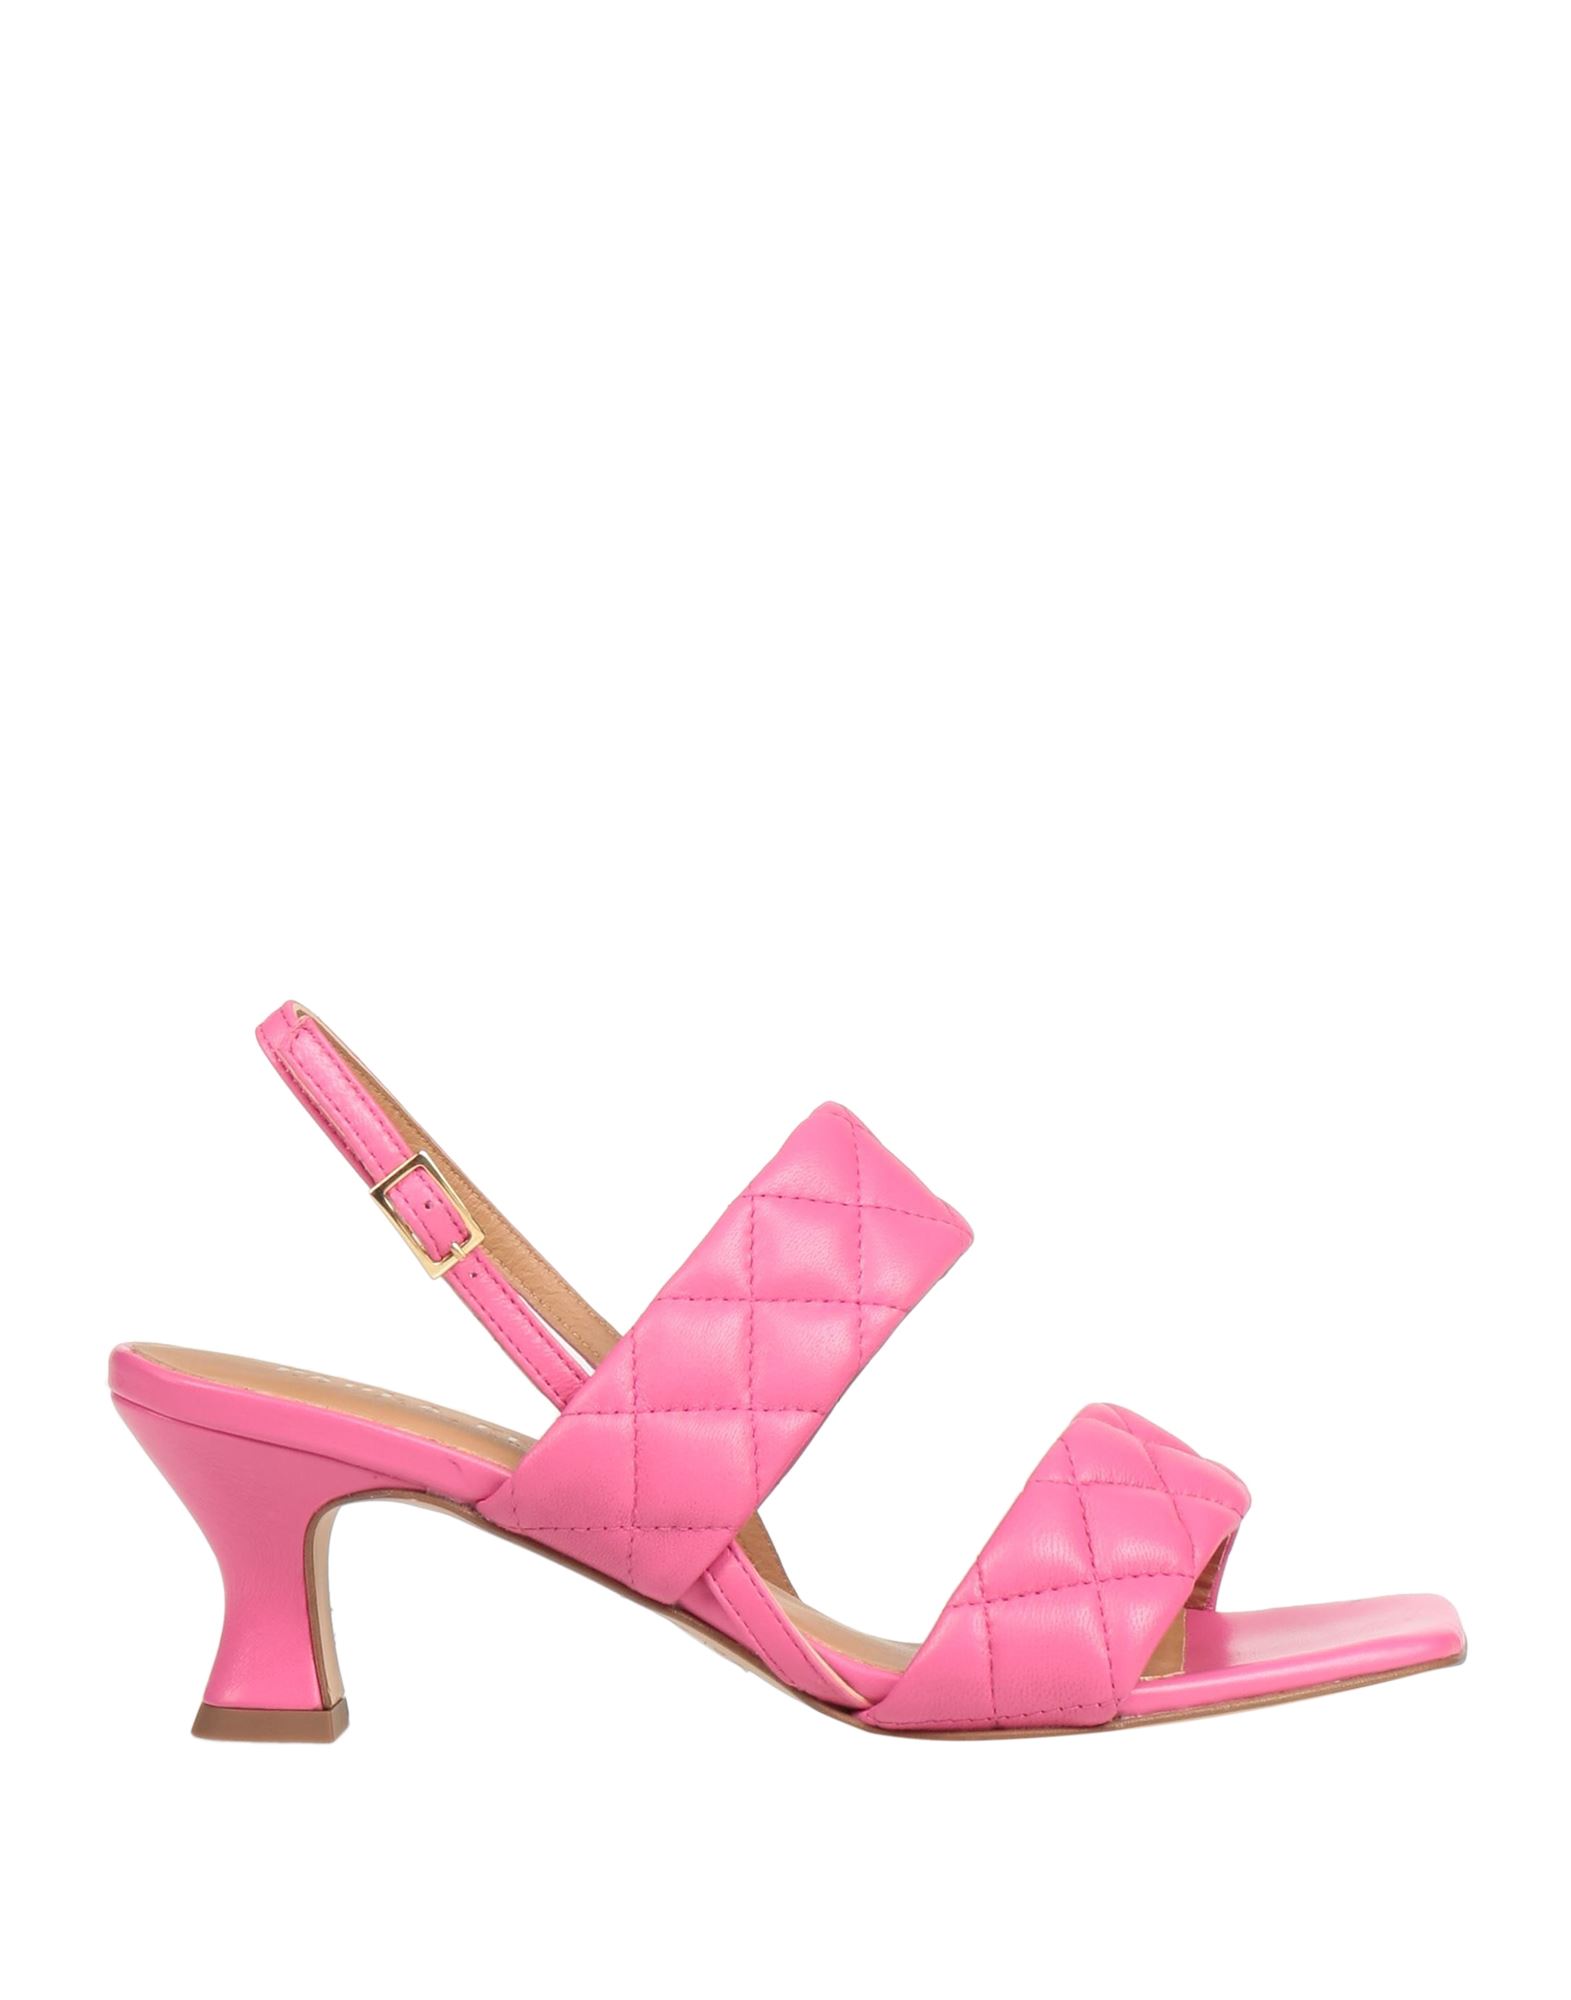 Paola Ferri Sandals In Pink